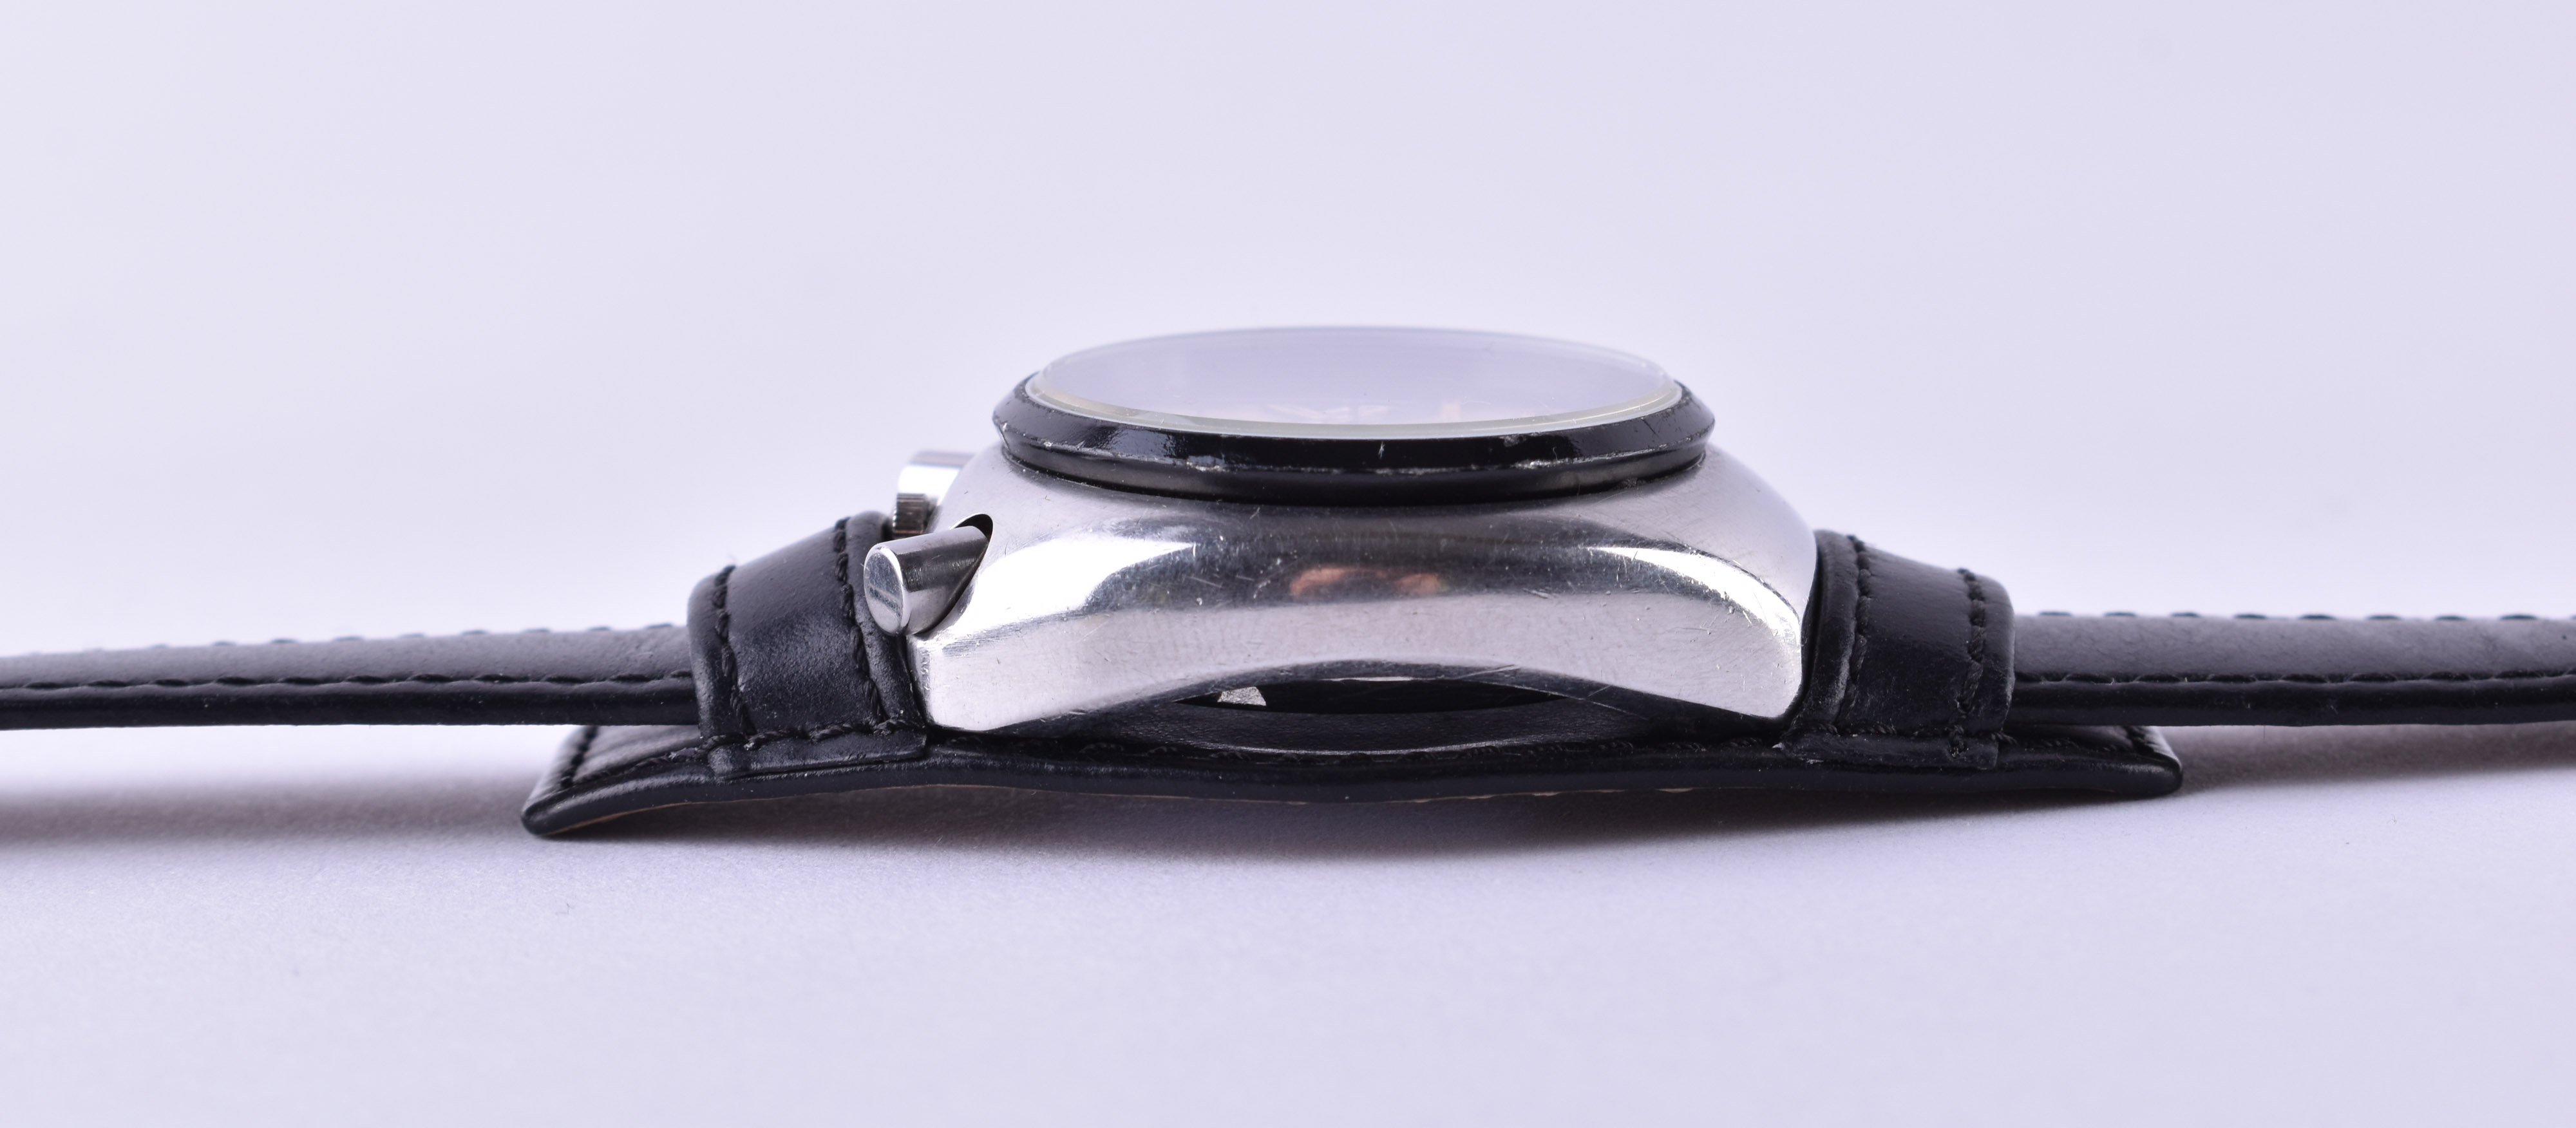 Citizen Bullhead calibre 8110 chronograph wristwatch 70s - Image 3 of 3